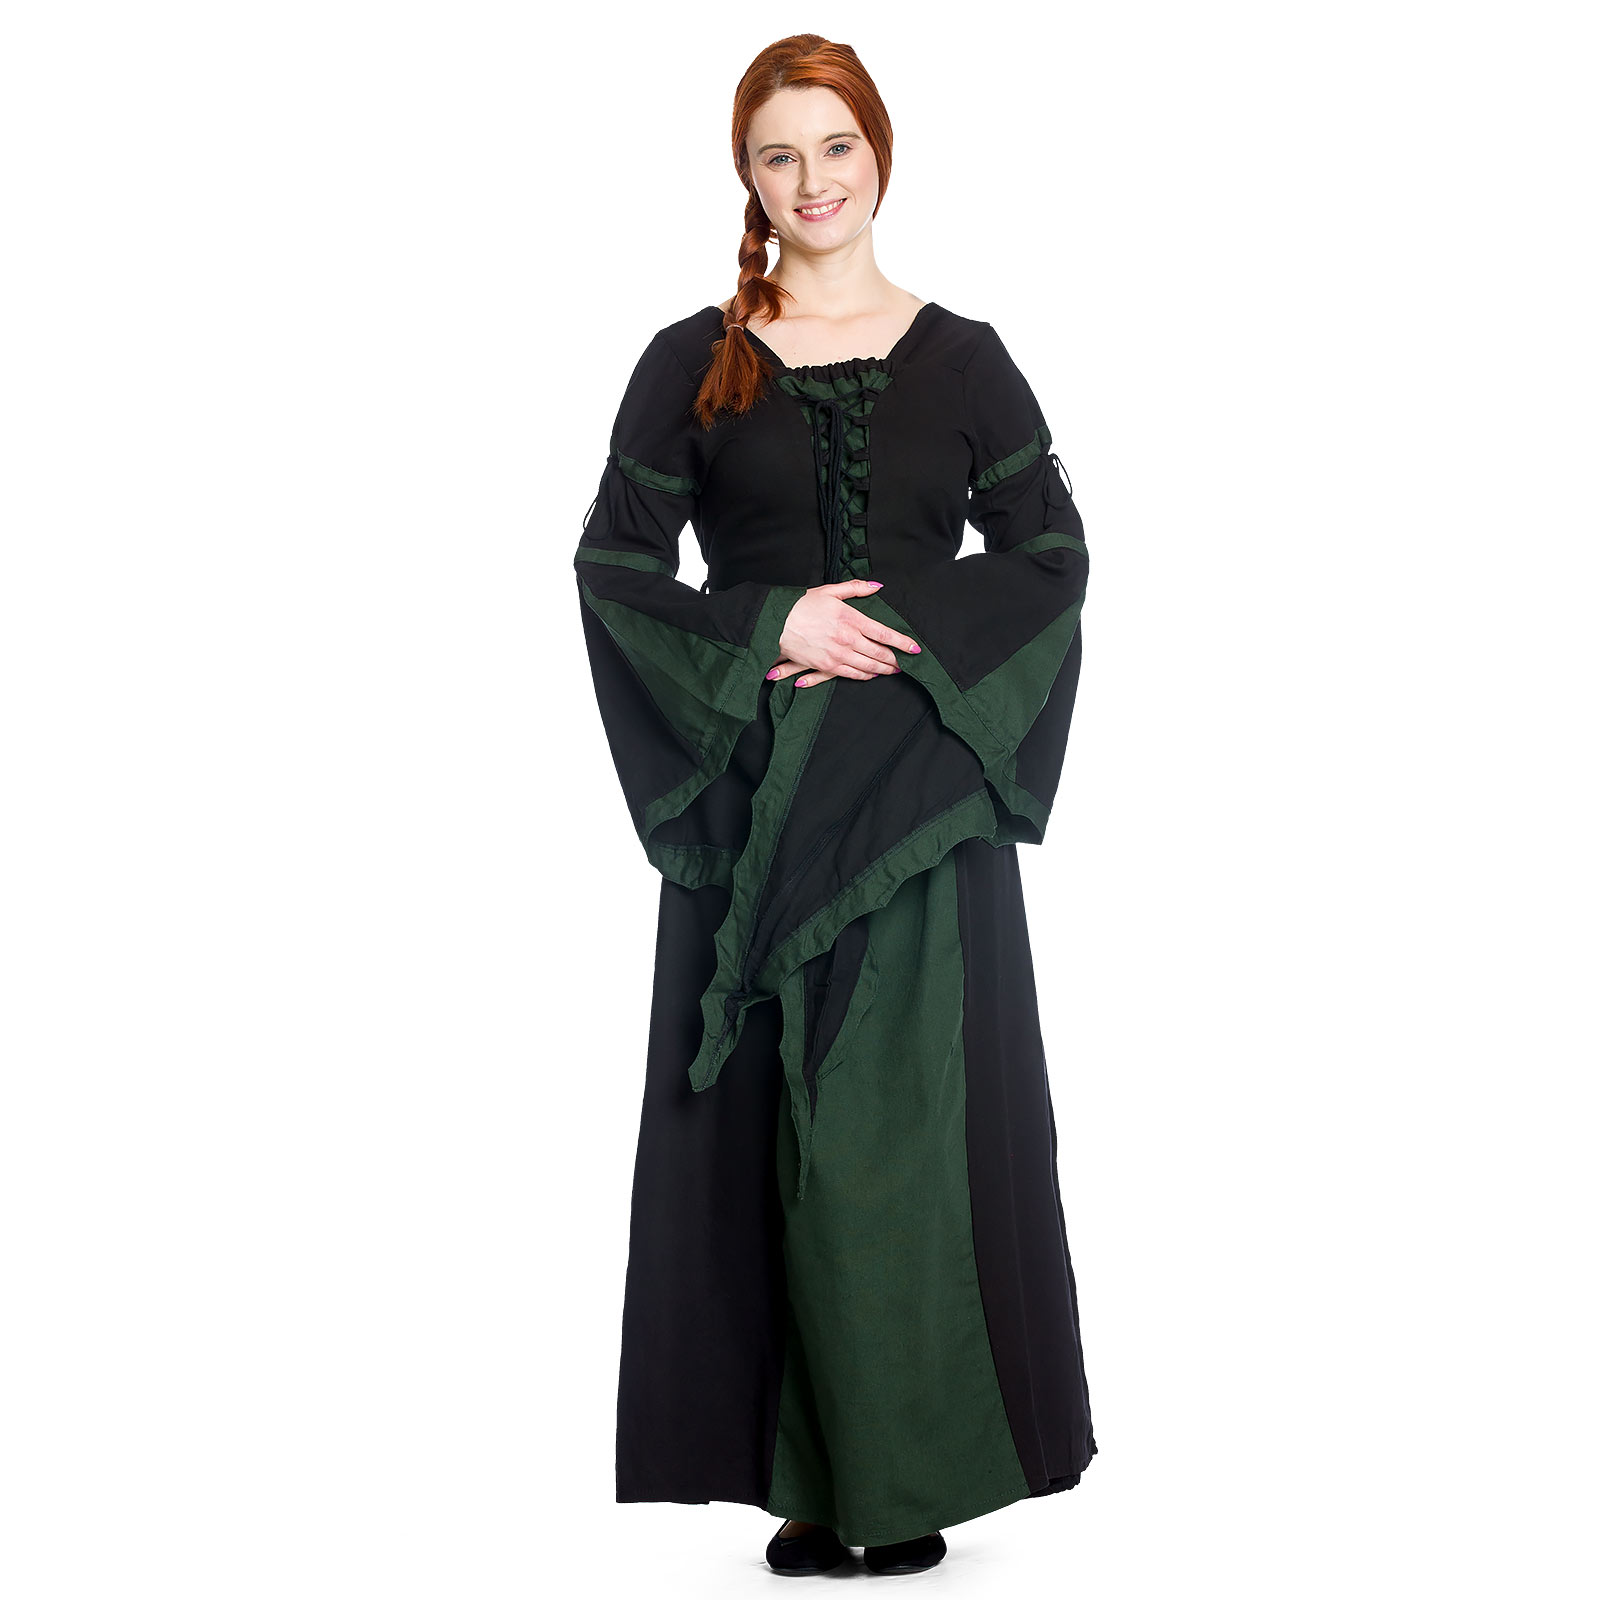 Leona - Robe médiévale noir-vert